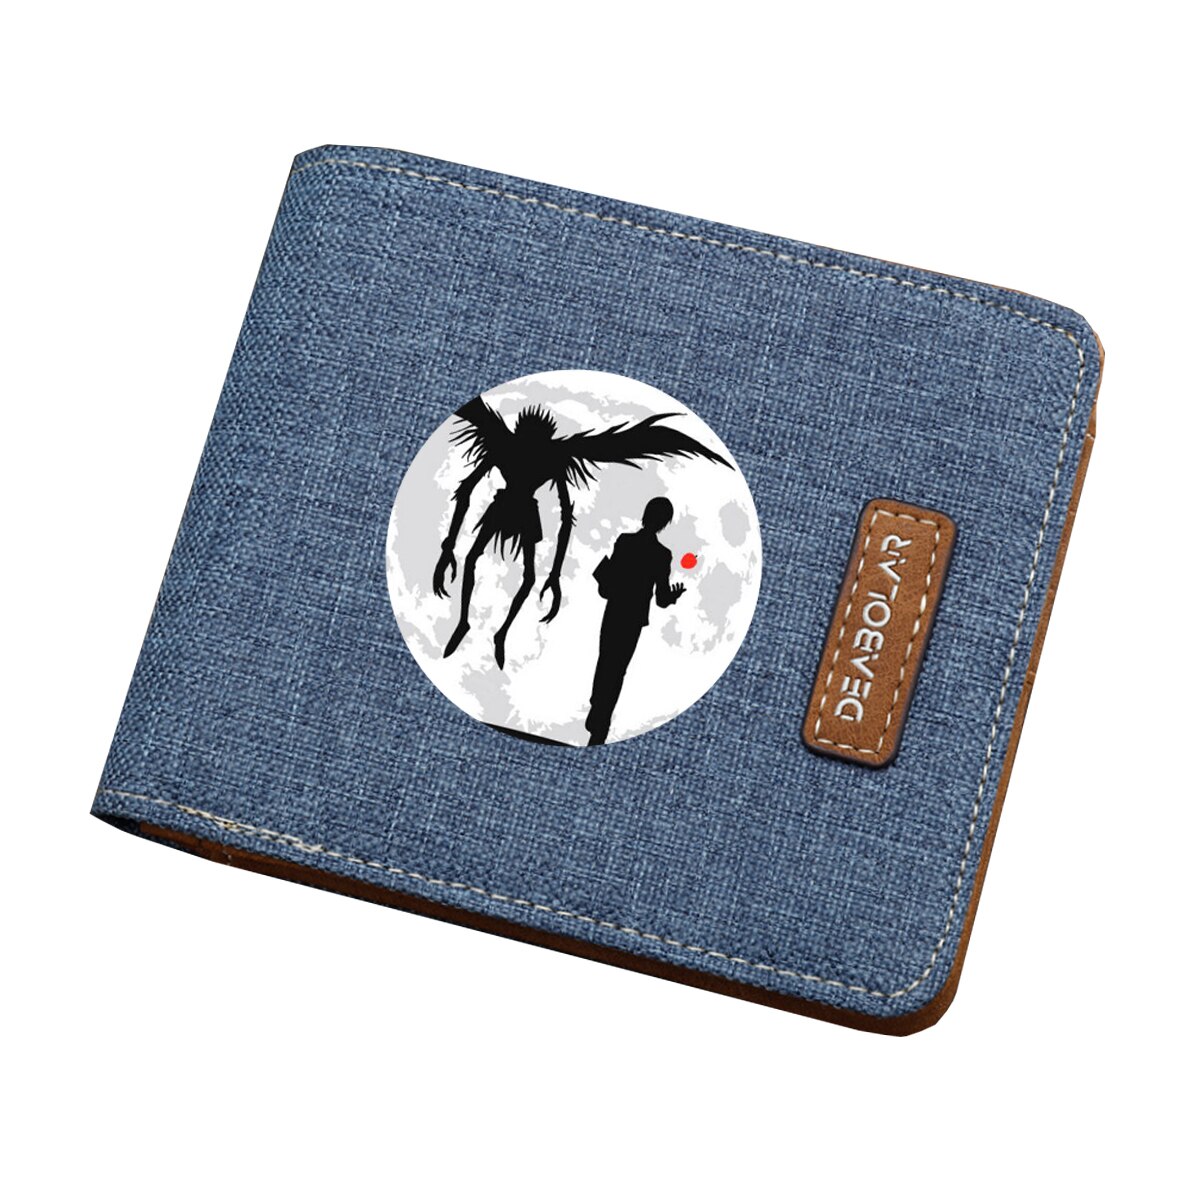 Japan anime Death Note Wallet Student Wallet ID/Credit Card Holder Cartoon Purse Men Women canvas Short Money Bag-